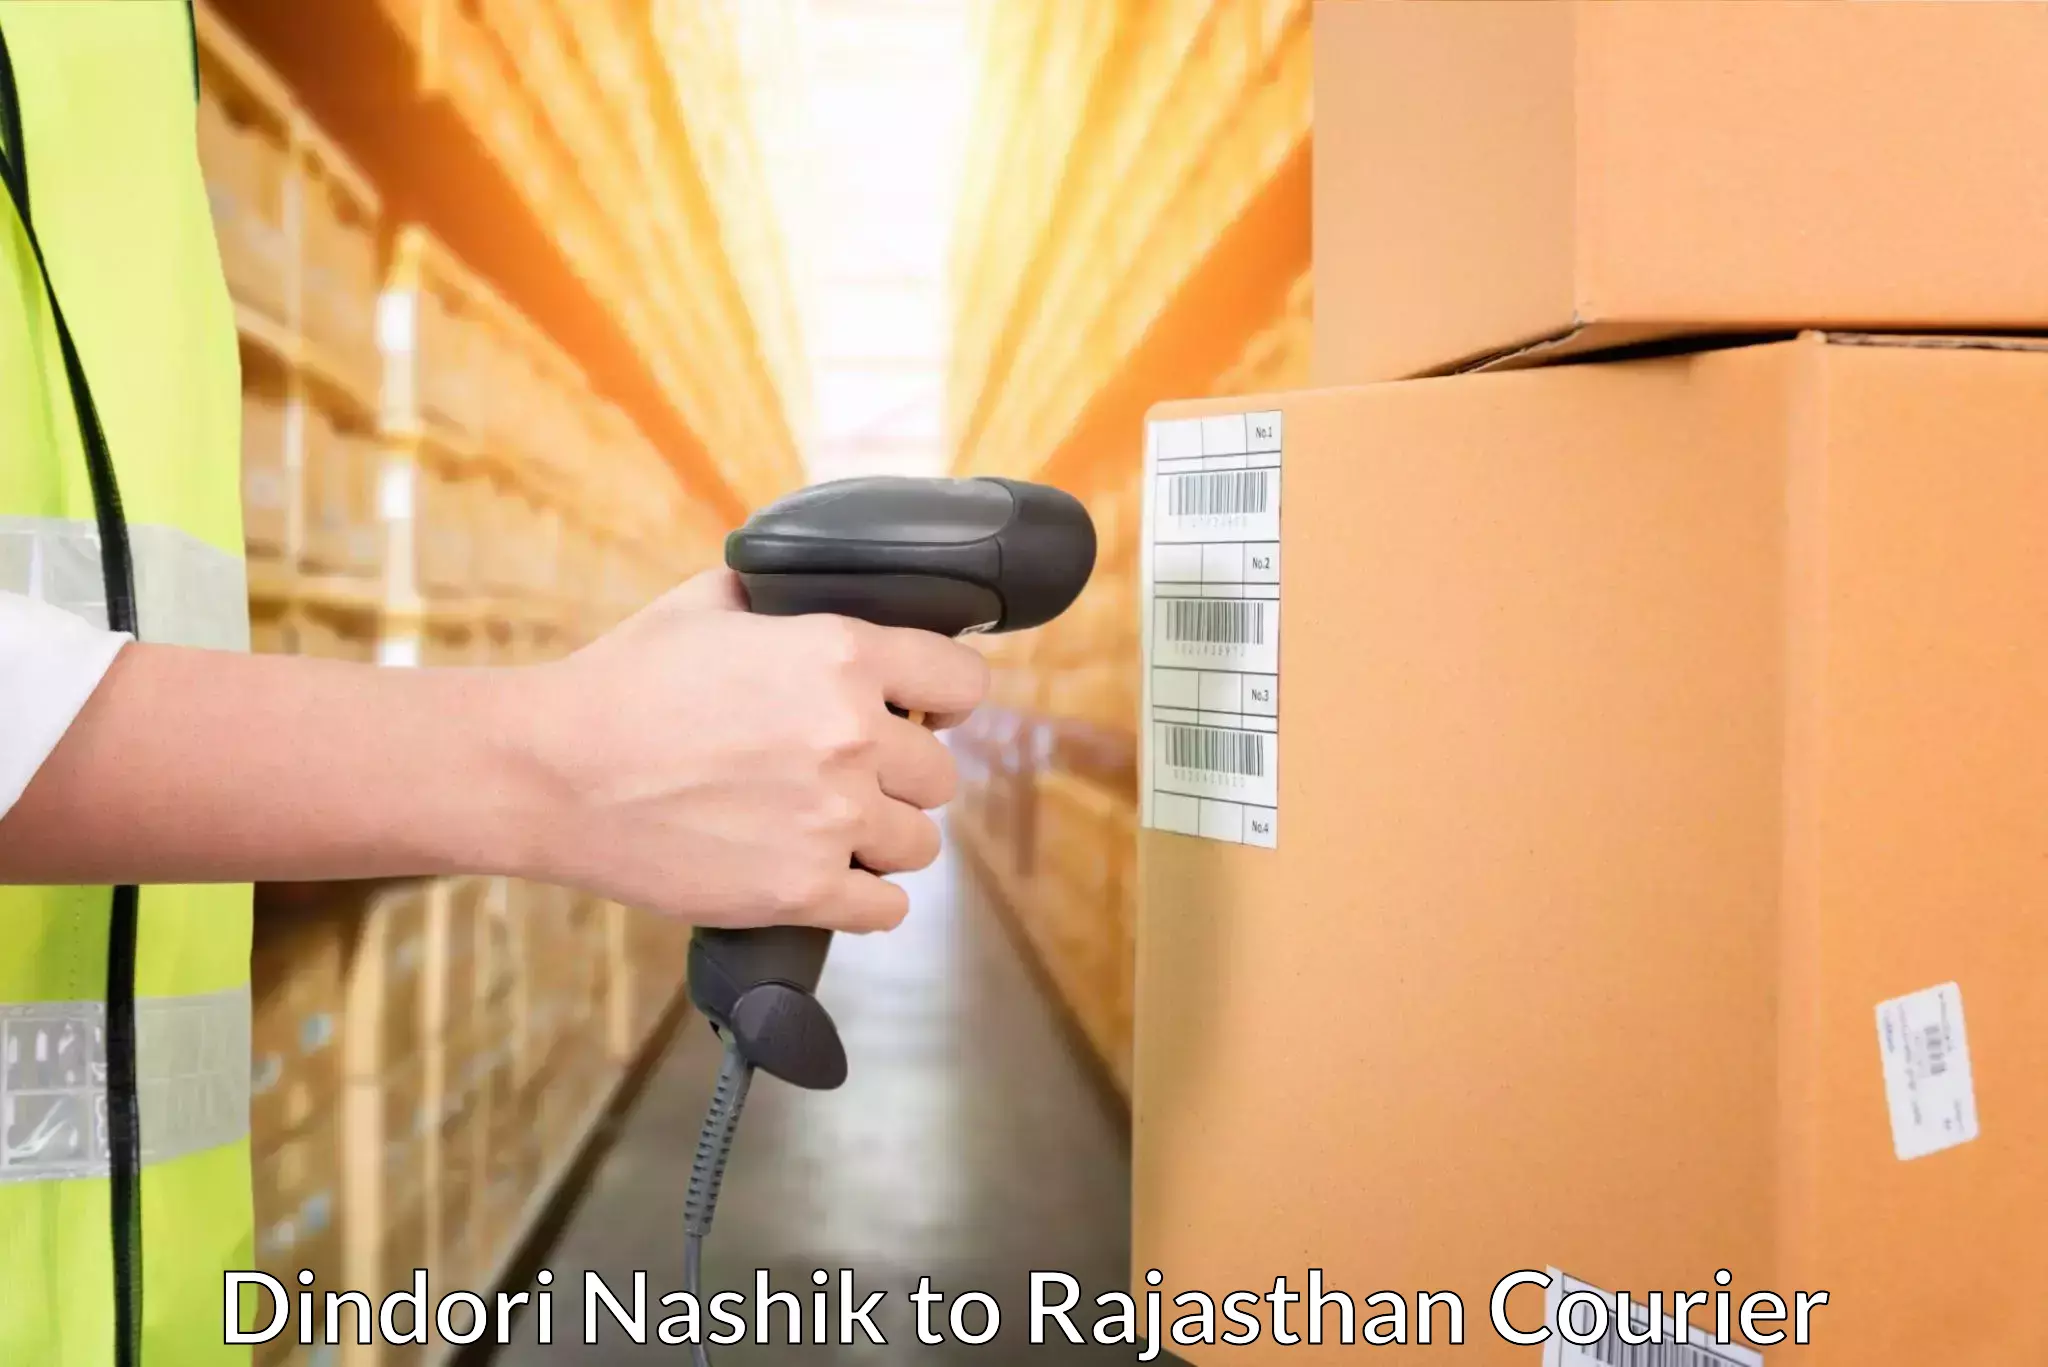 Package delivery network Dindori Nashik to Sri Ganganagar